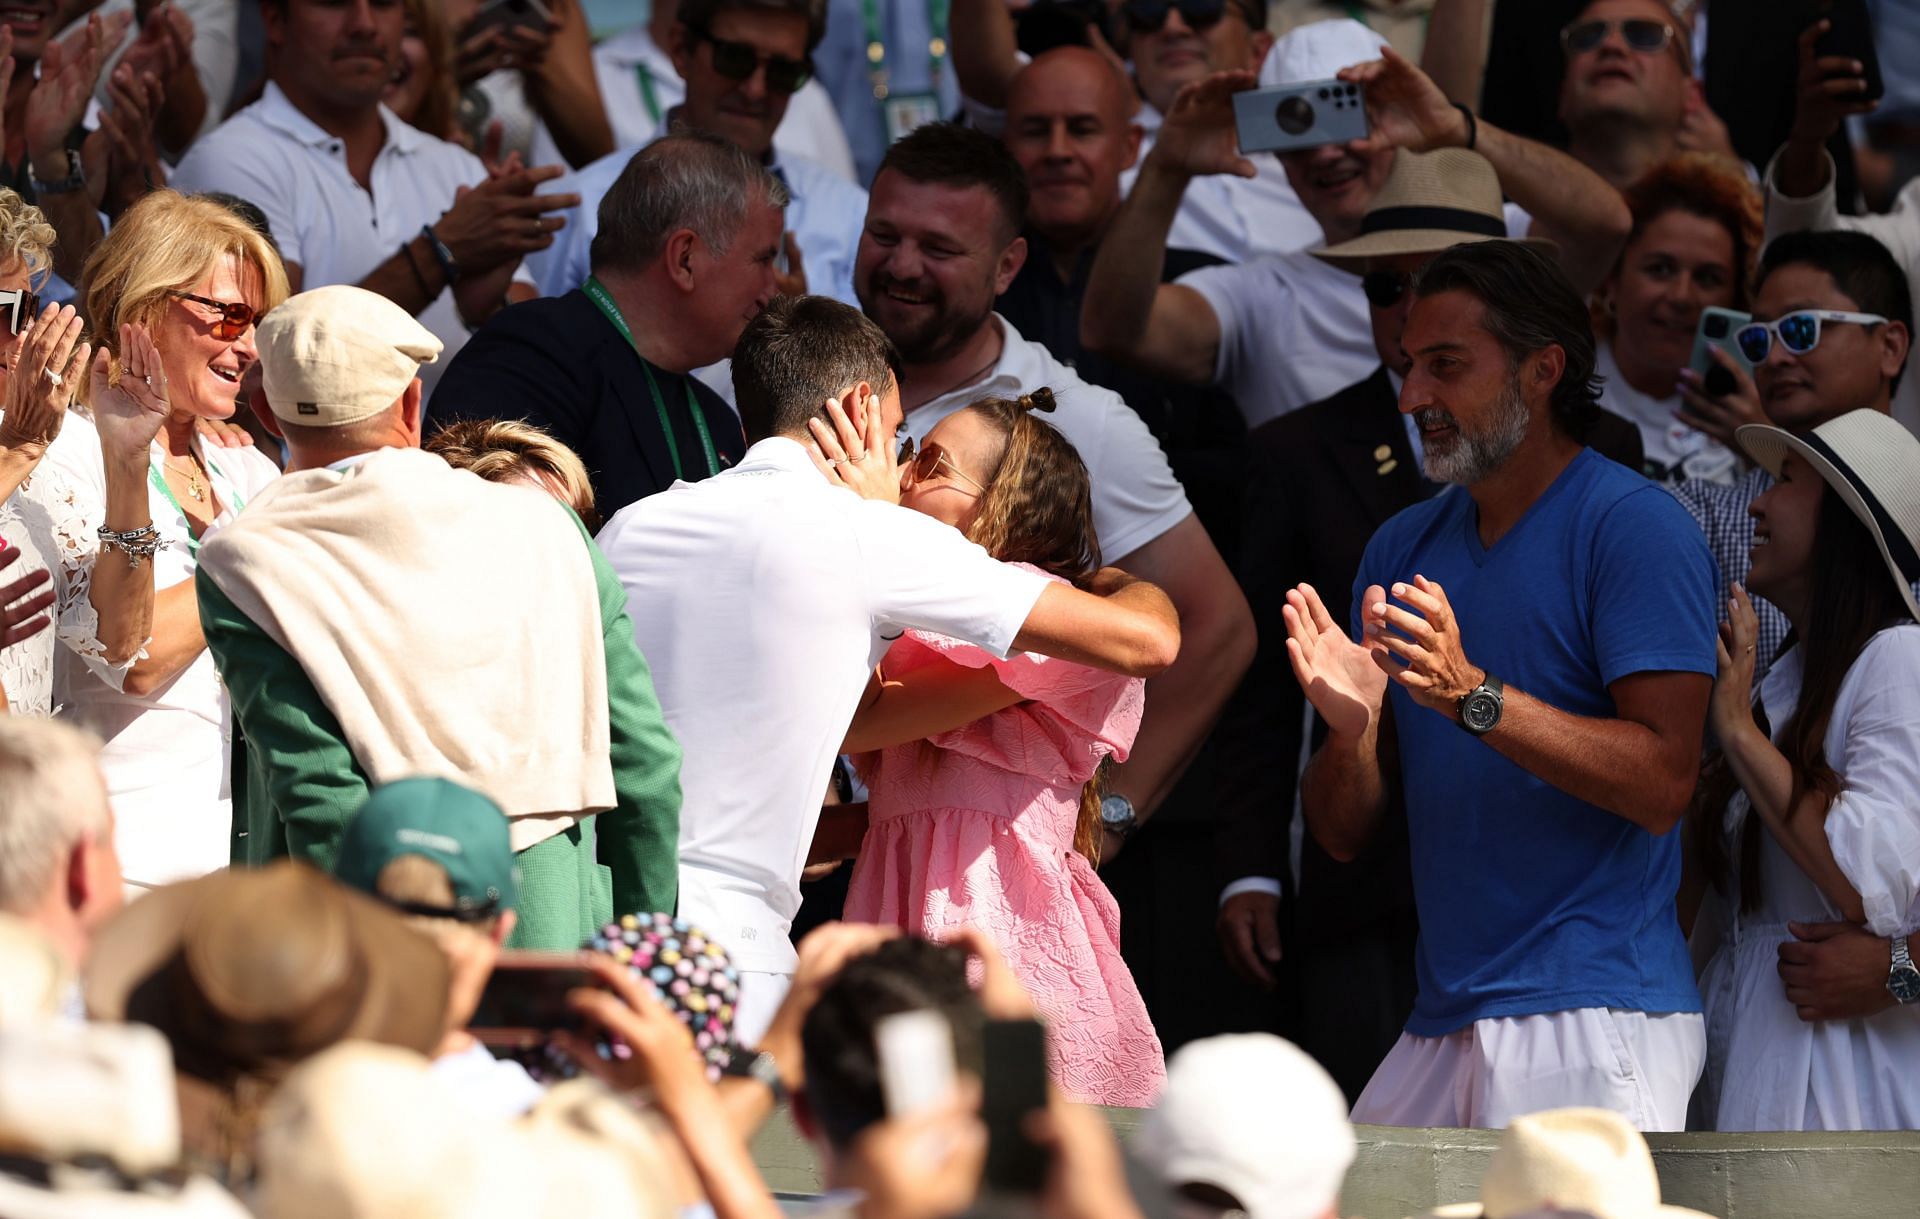 Djokovic embraces his wife after winning Wimbledon